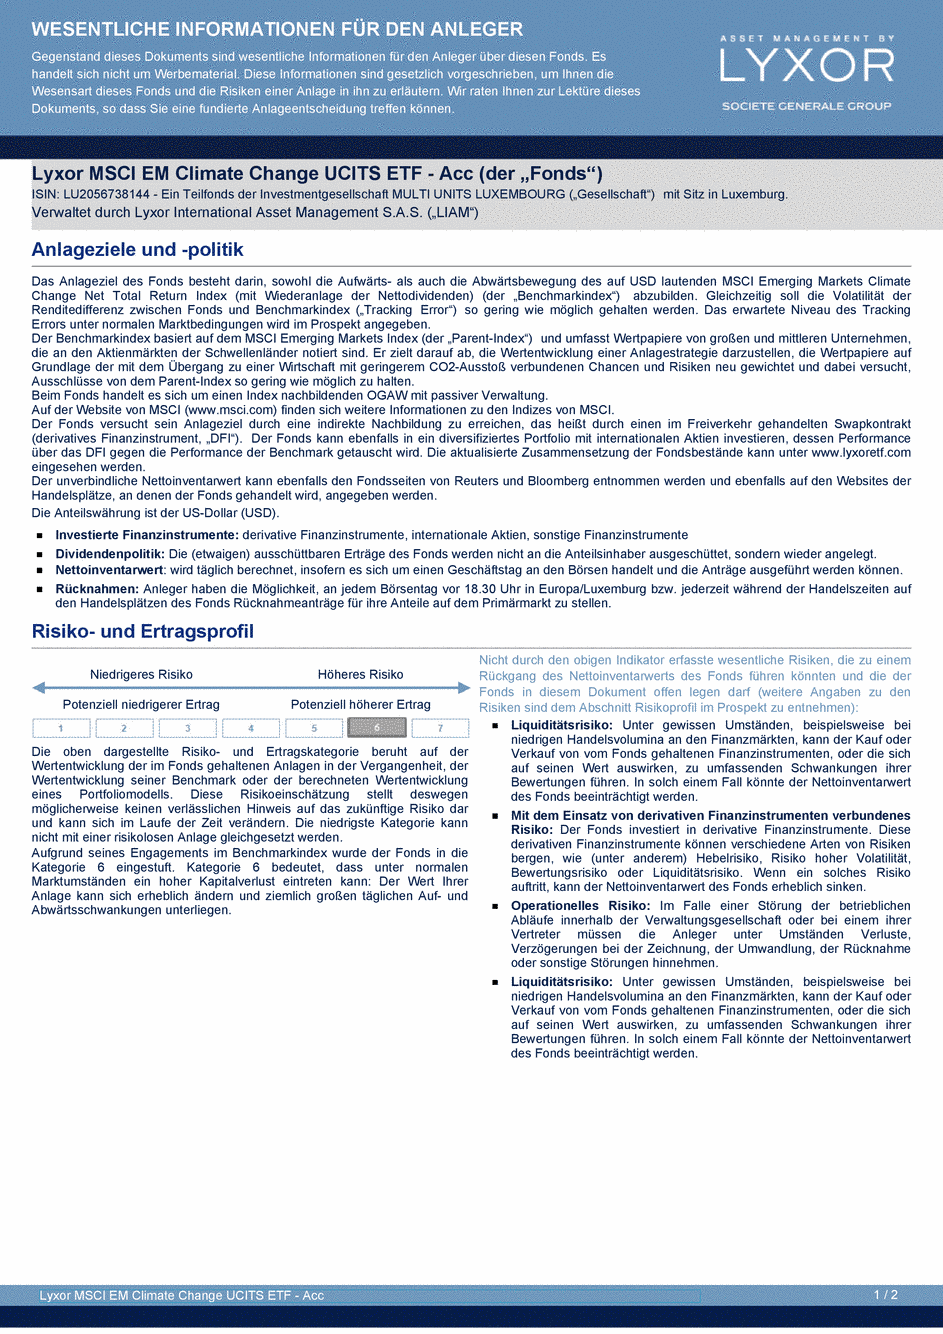 DICI Lyxor MSCI EM Climate Change UCITS ETF - Acc - 25/03/2020 - Allemand